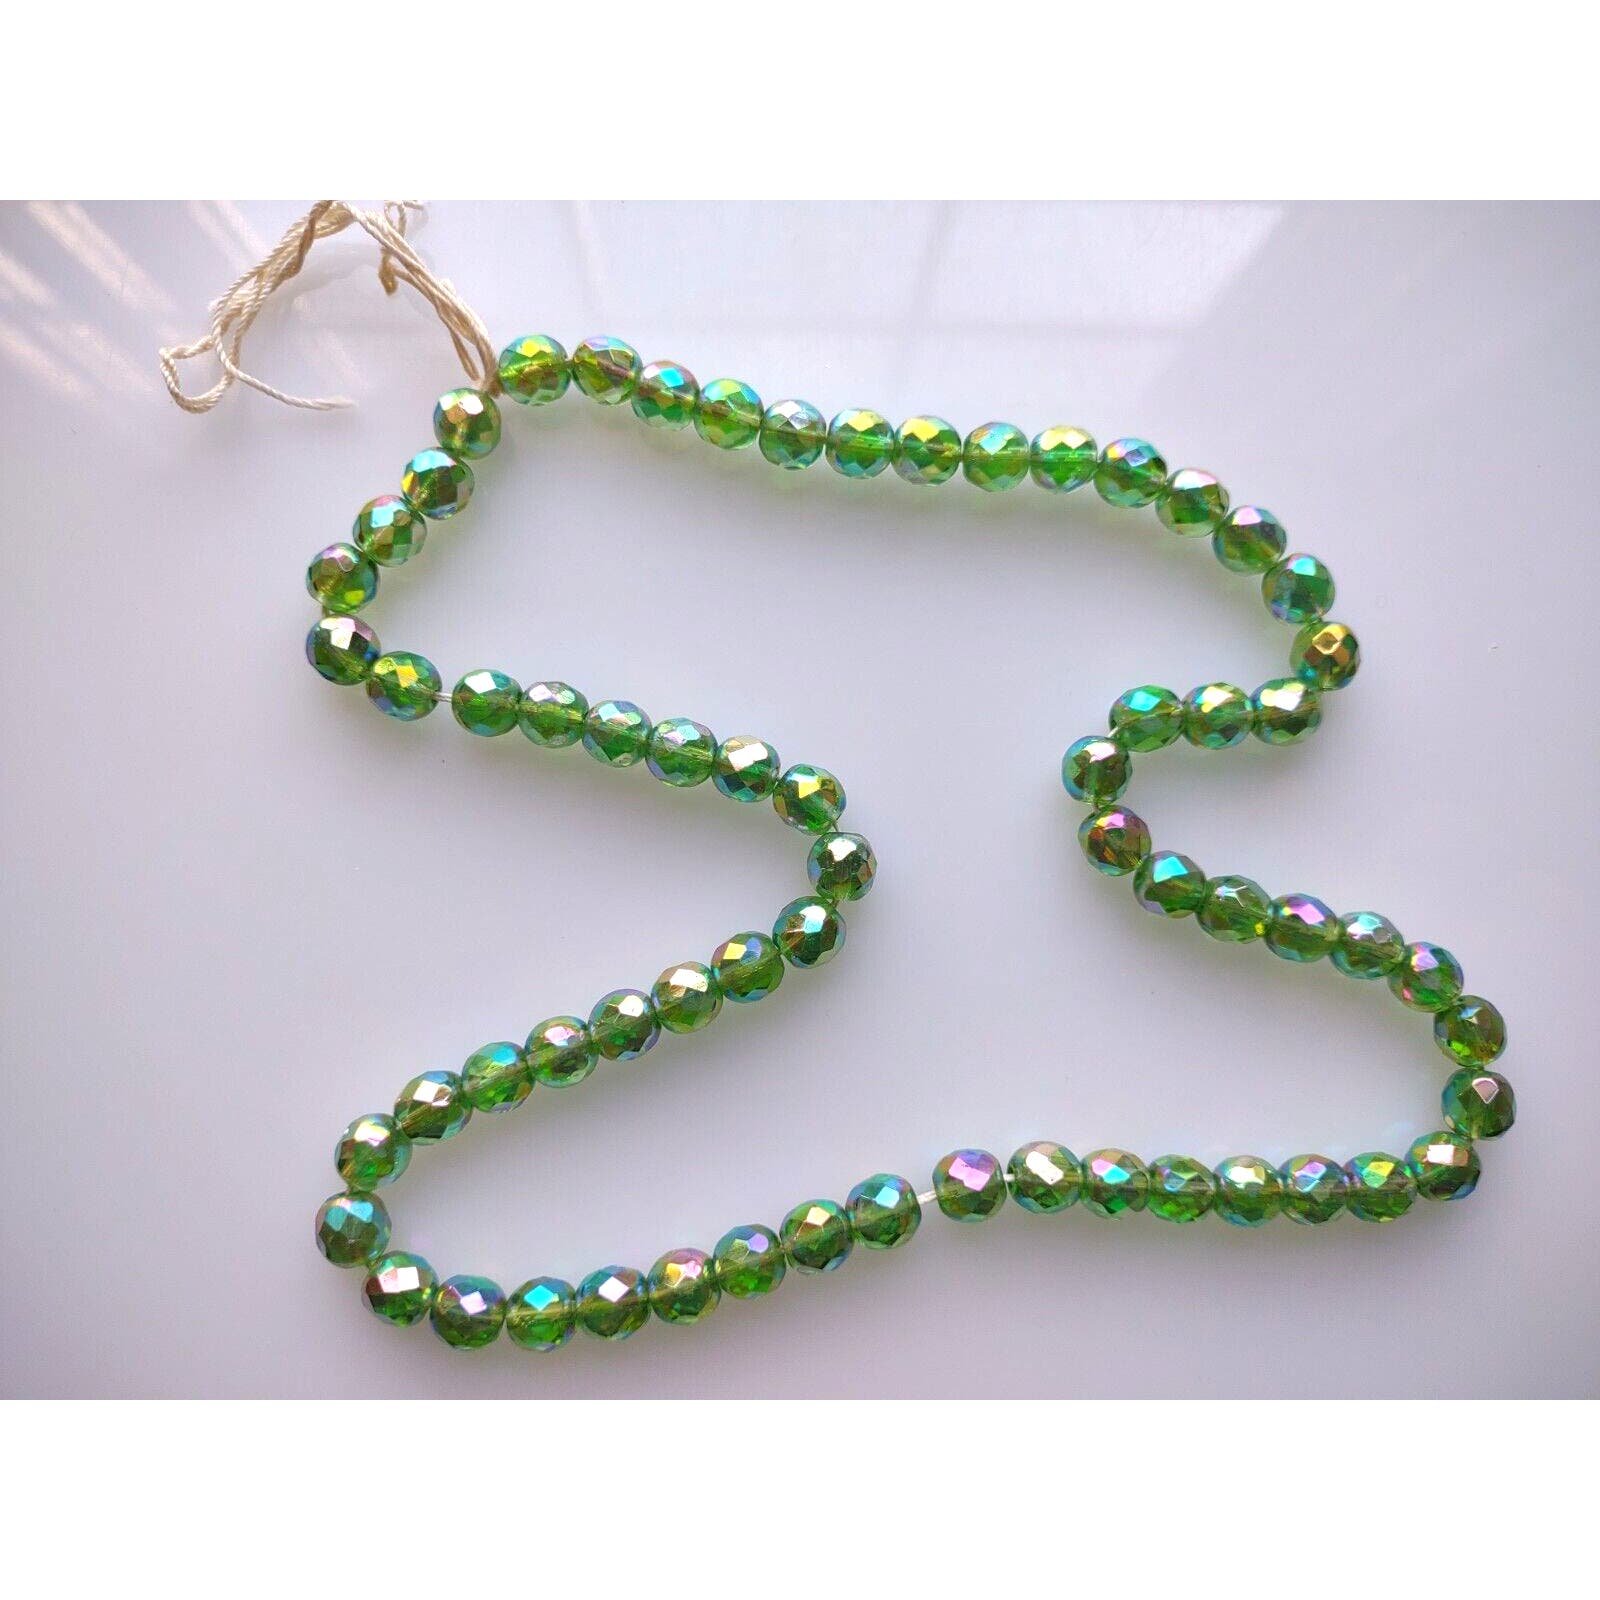 60 Vintage Green Glass Aurora Borealis Retro Beads Jewelry Crafts NOS 8mm German HozNzzWLM